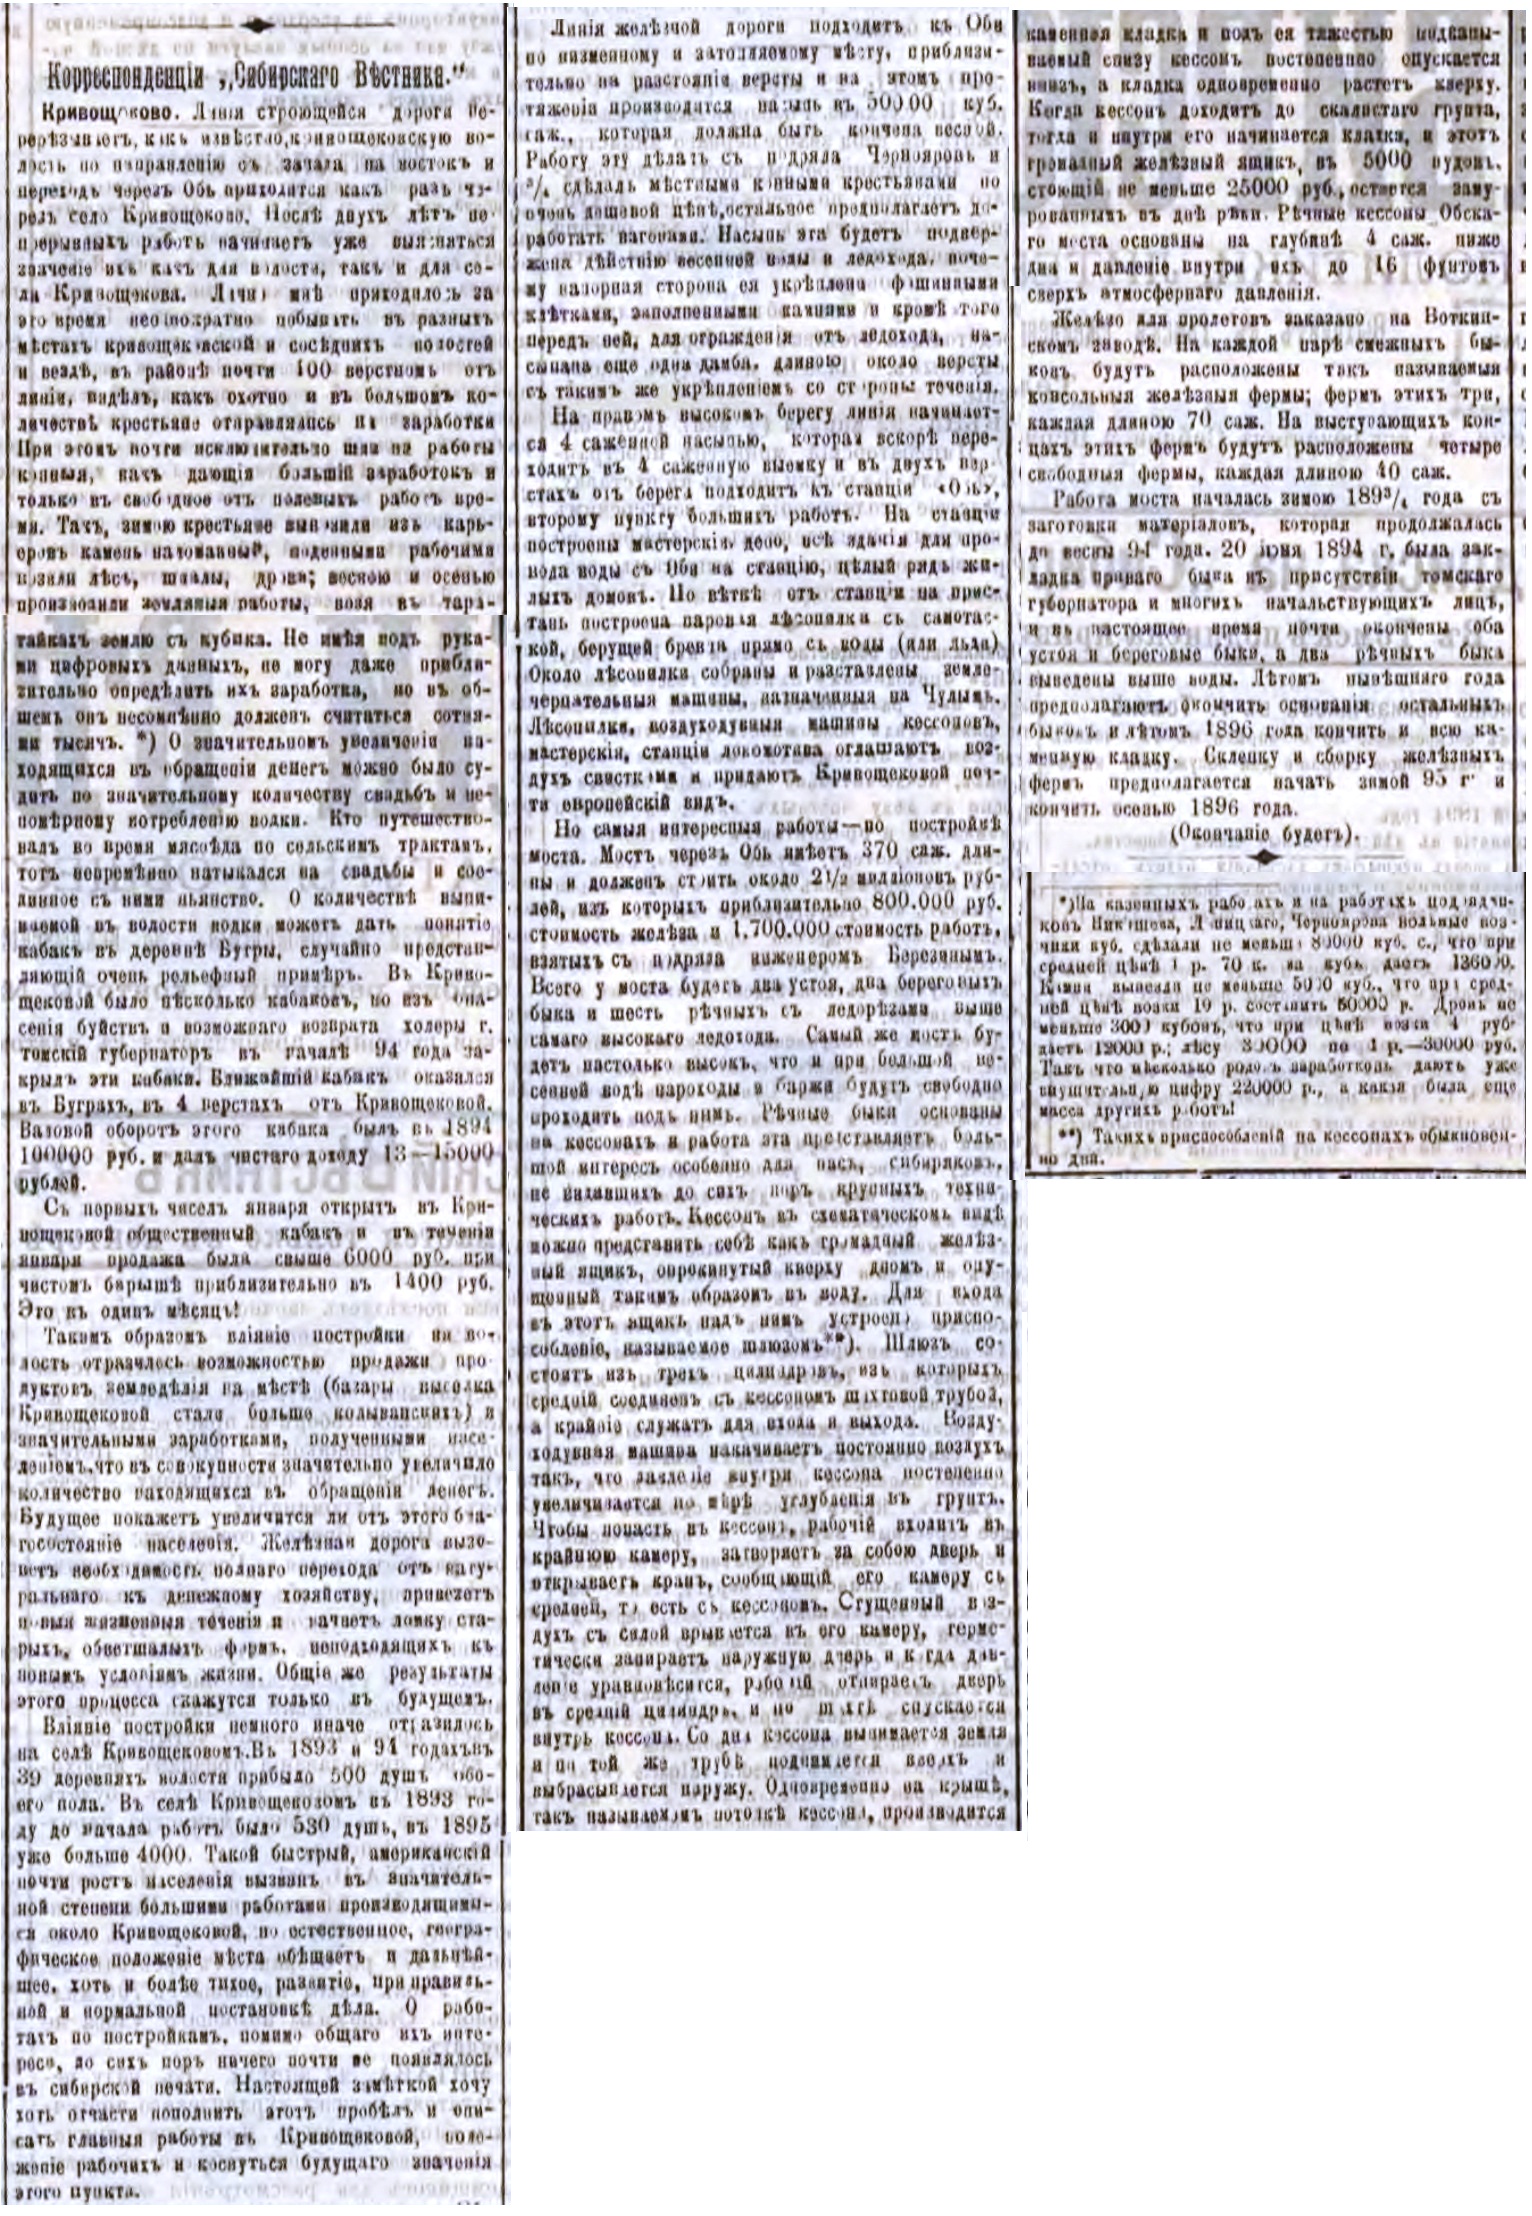 Сибирский вестник №46 25 апреля 1895